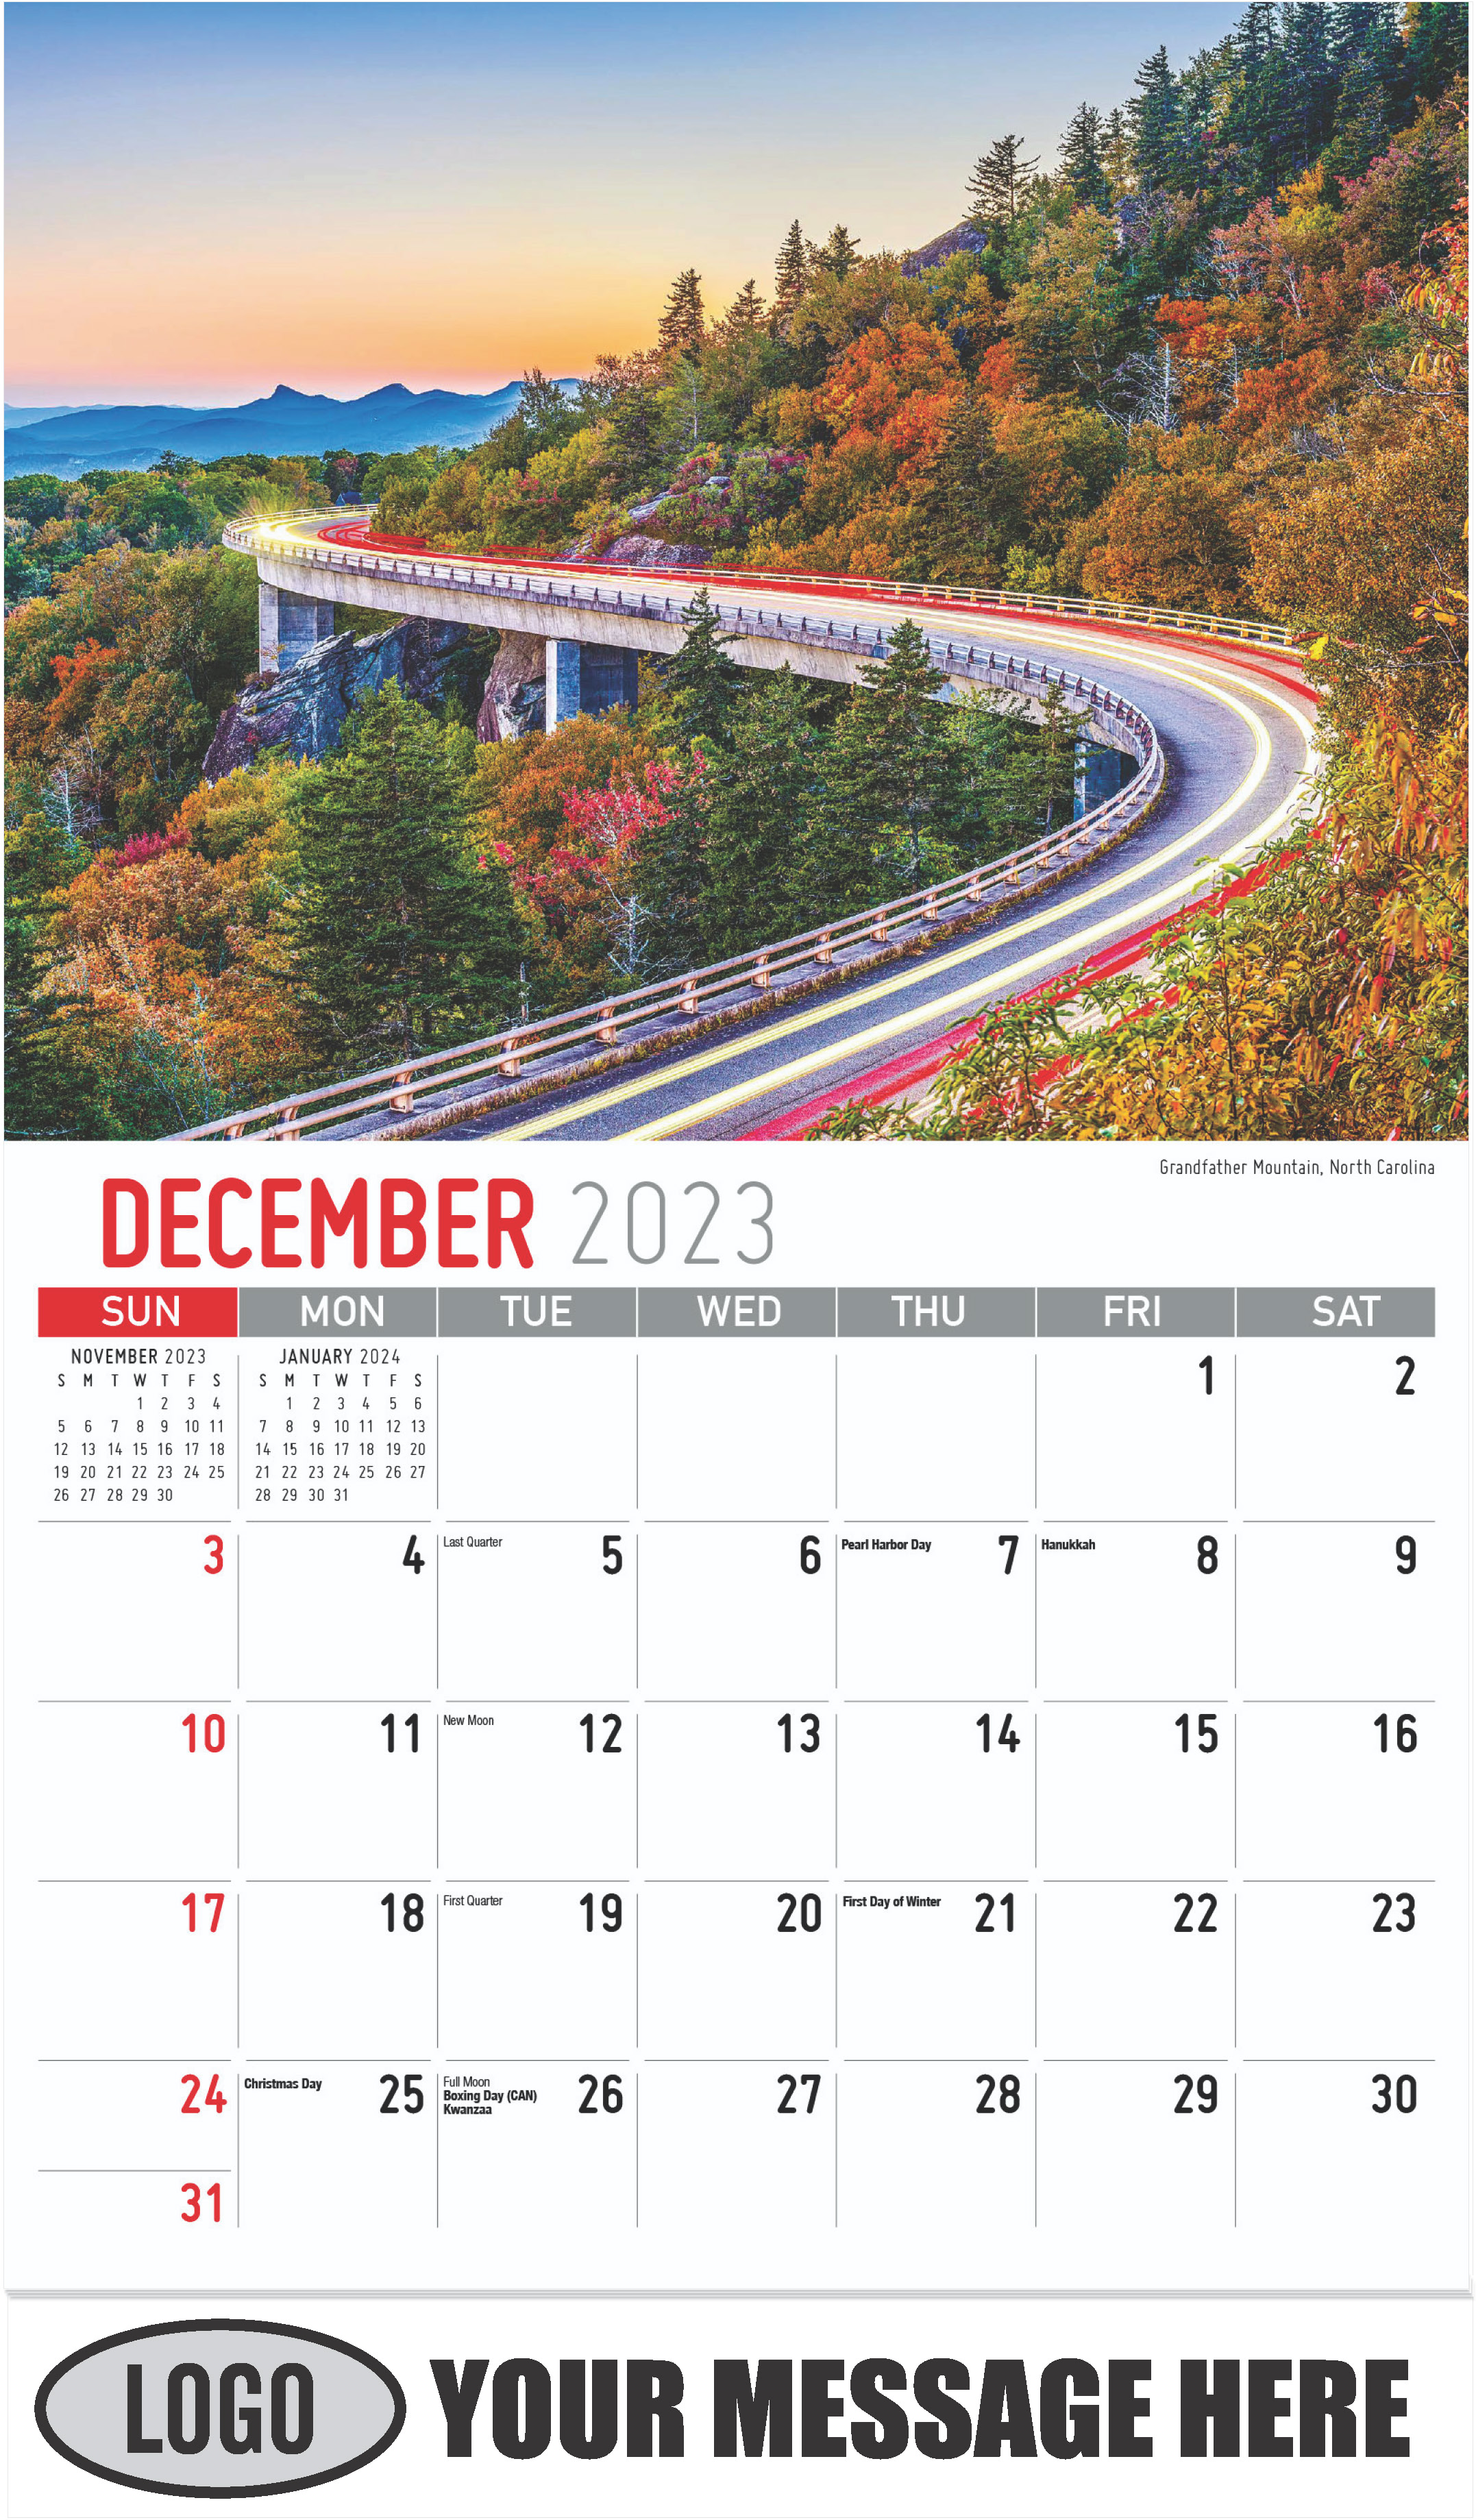 Grandfather Mountain, North Carolina - December 2023 - Scenes of Southeast USA 2023 Promotional Calendar